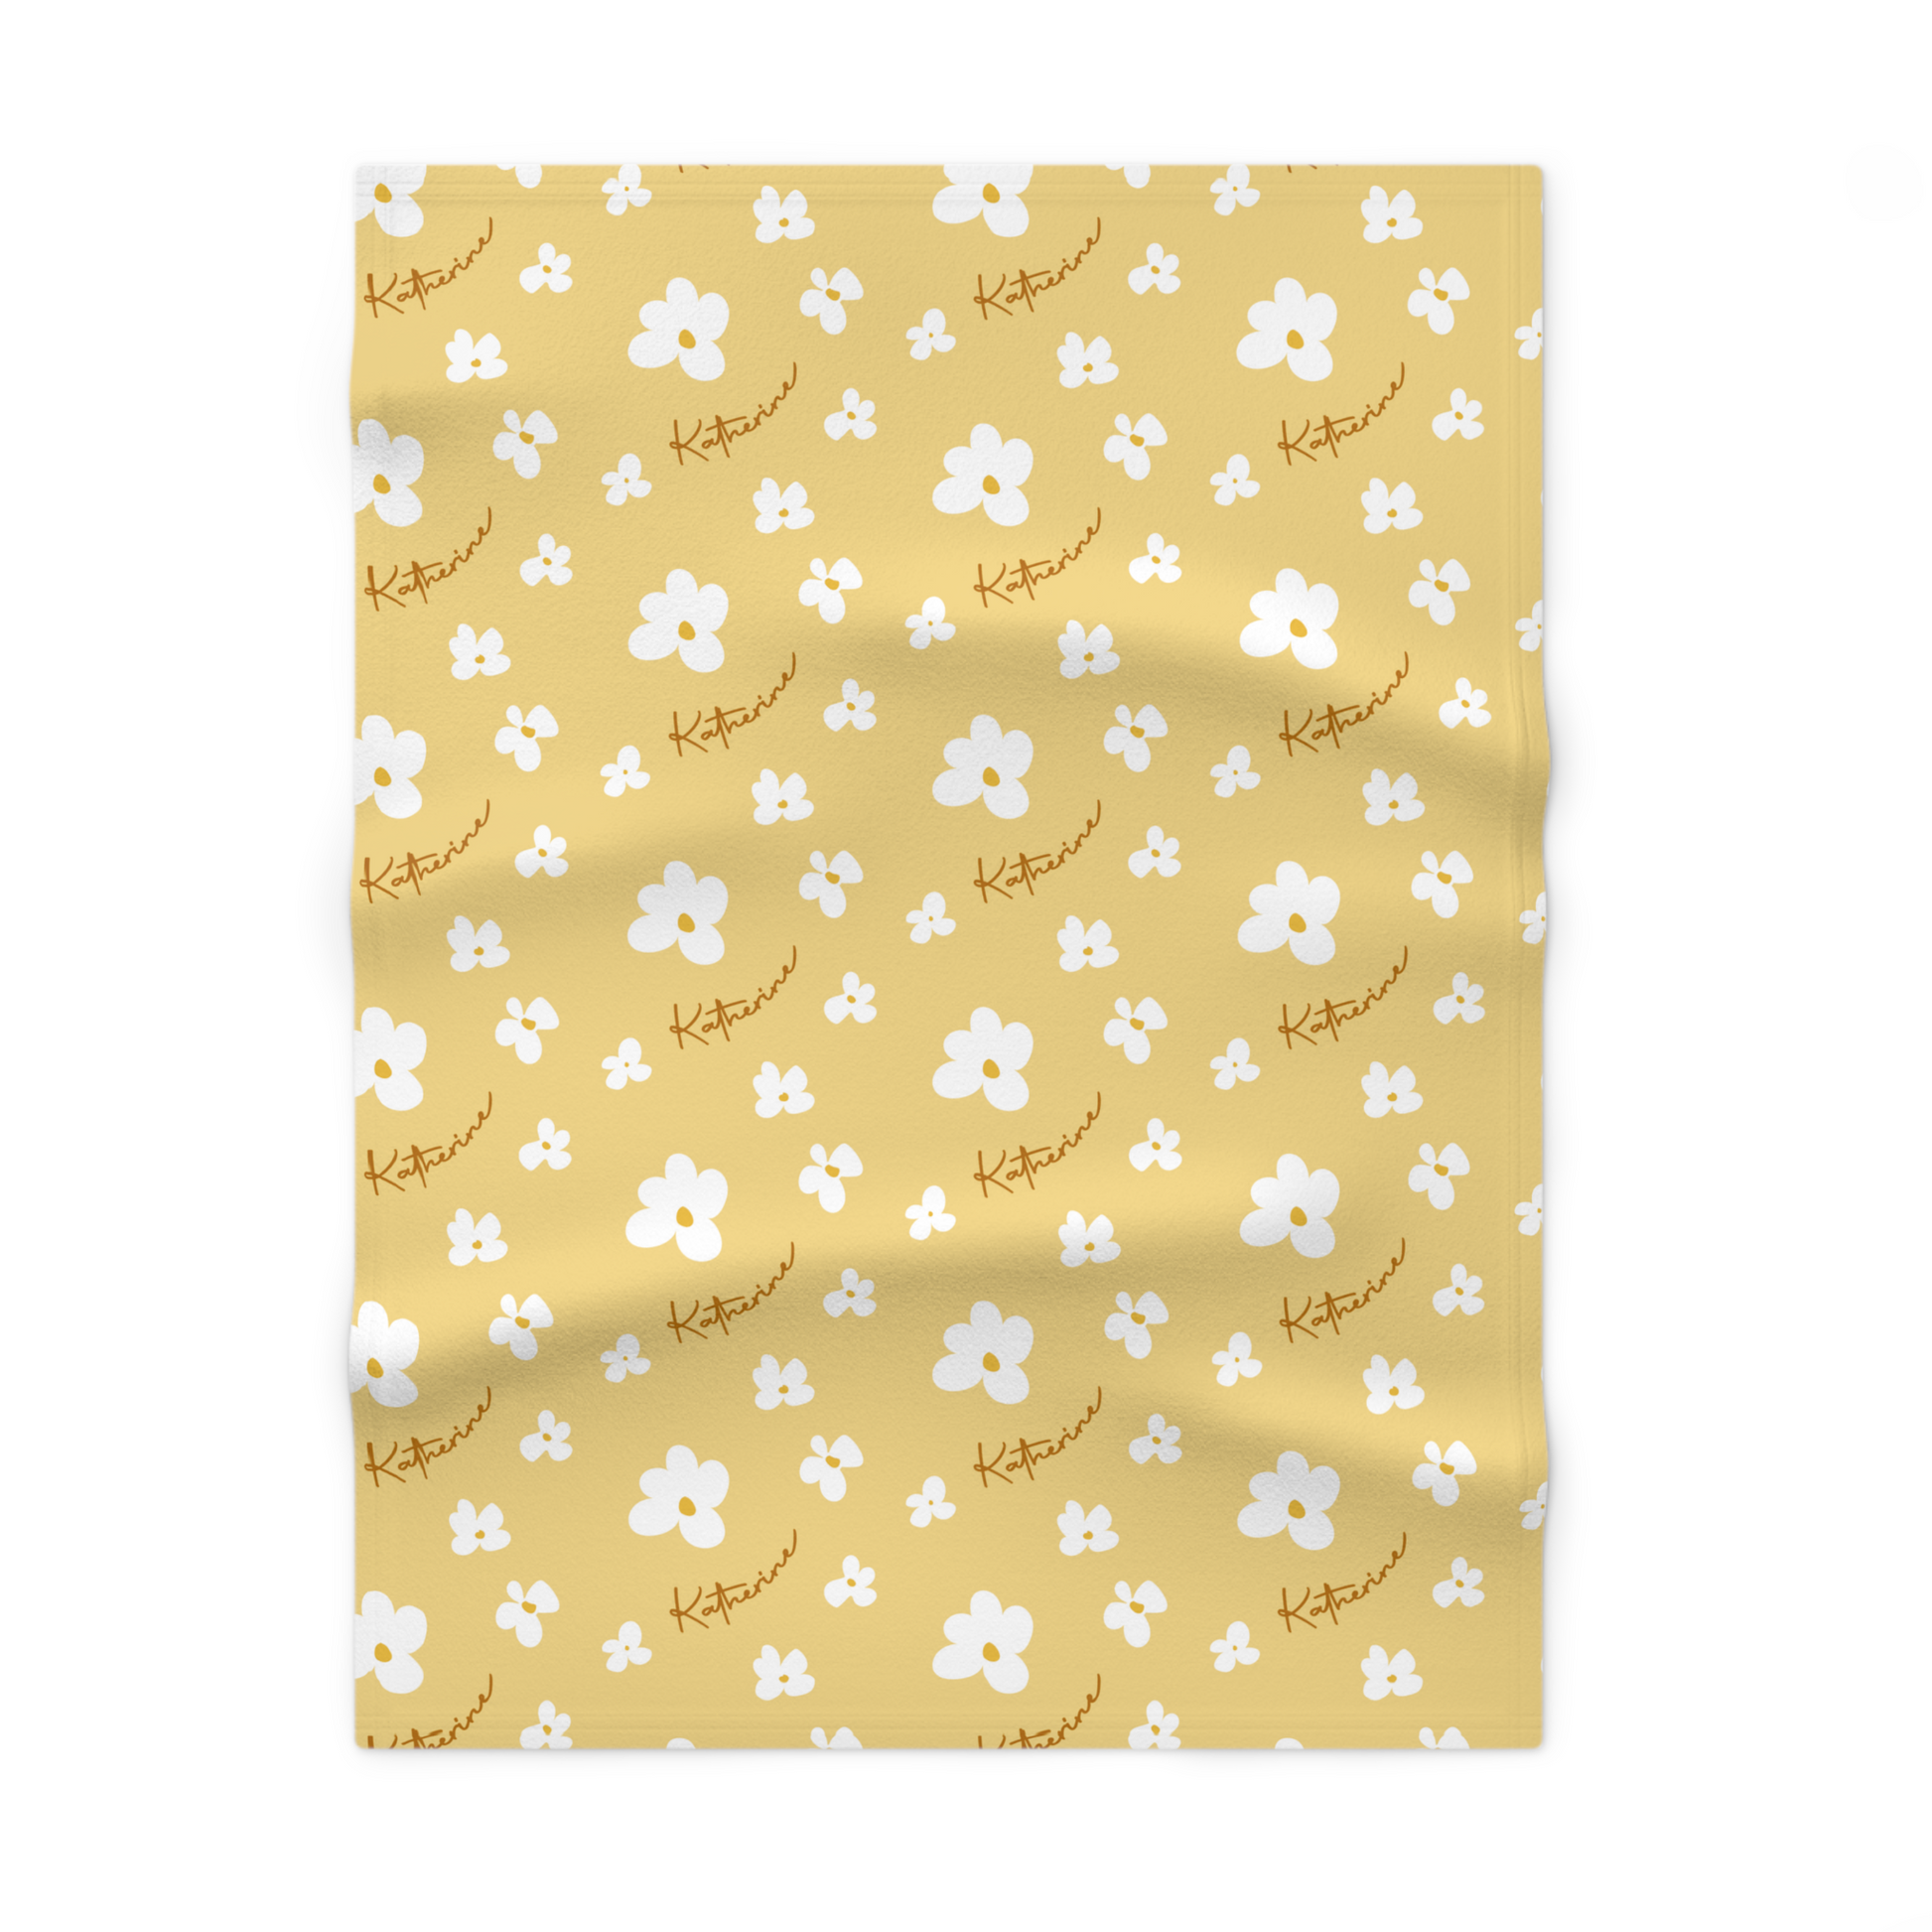 Fleece personalized baby blanket in yellow daisy pattern laid flat